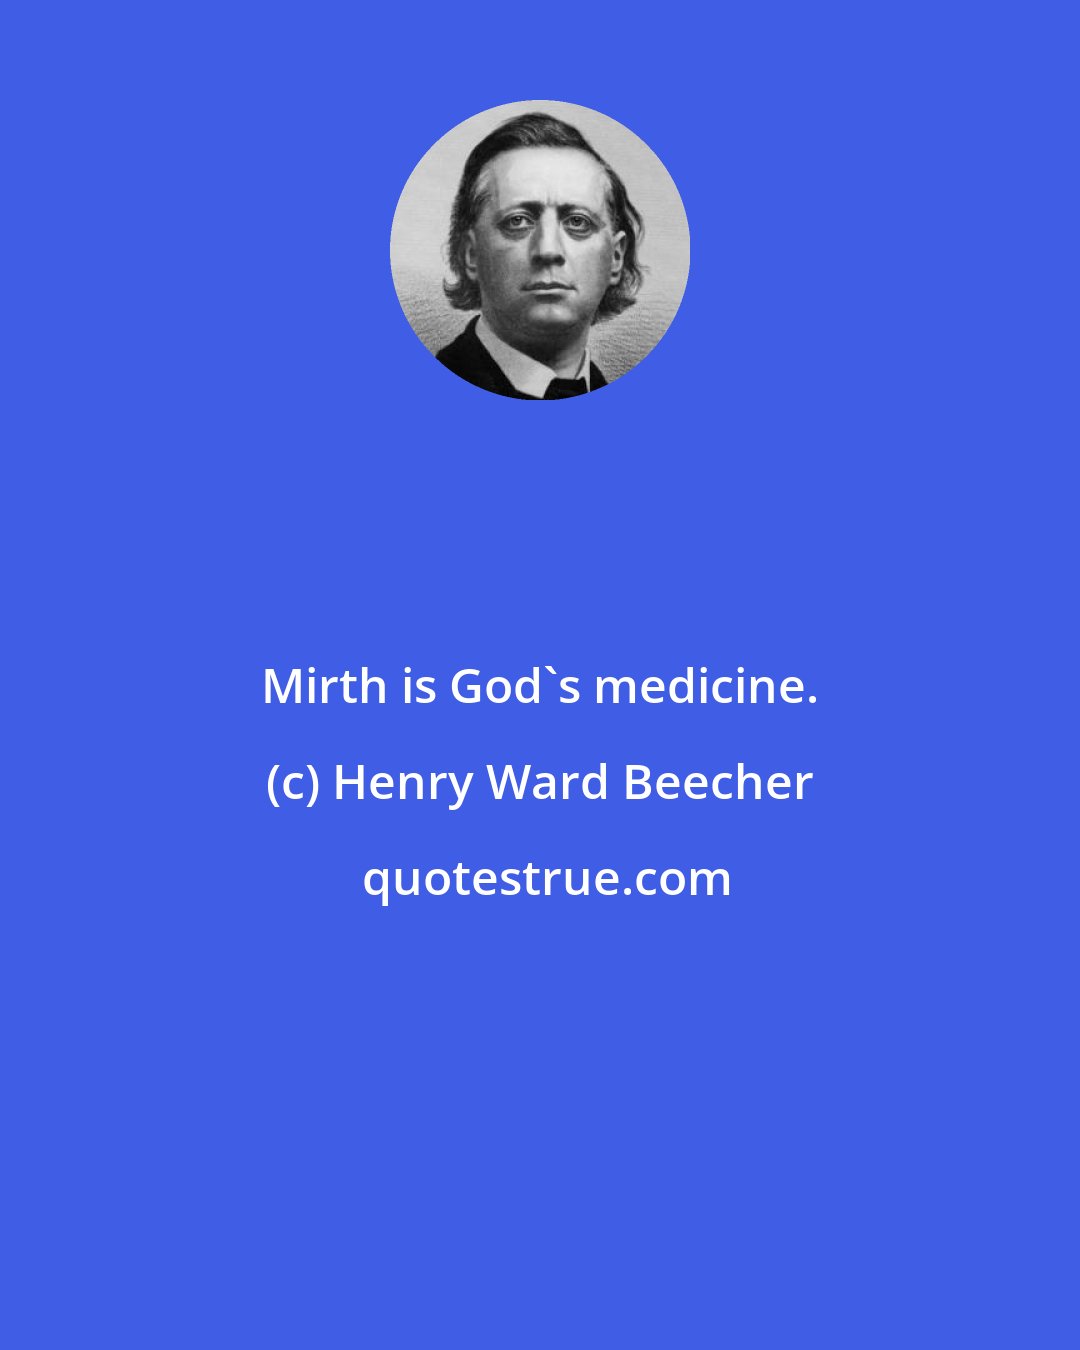 Henry Ward Beecher: Mirth is God's medicine.